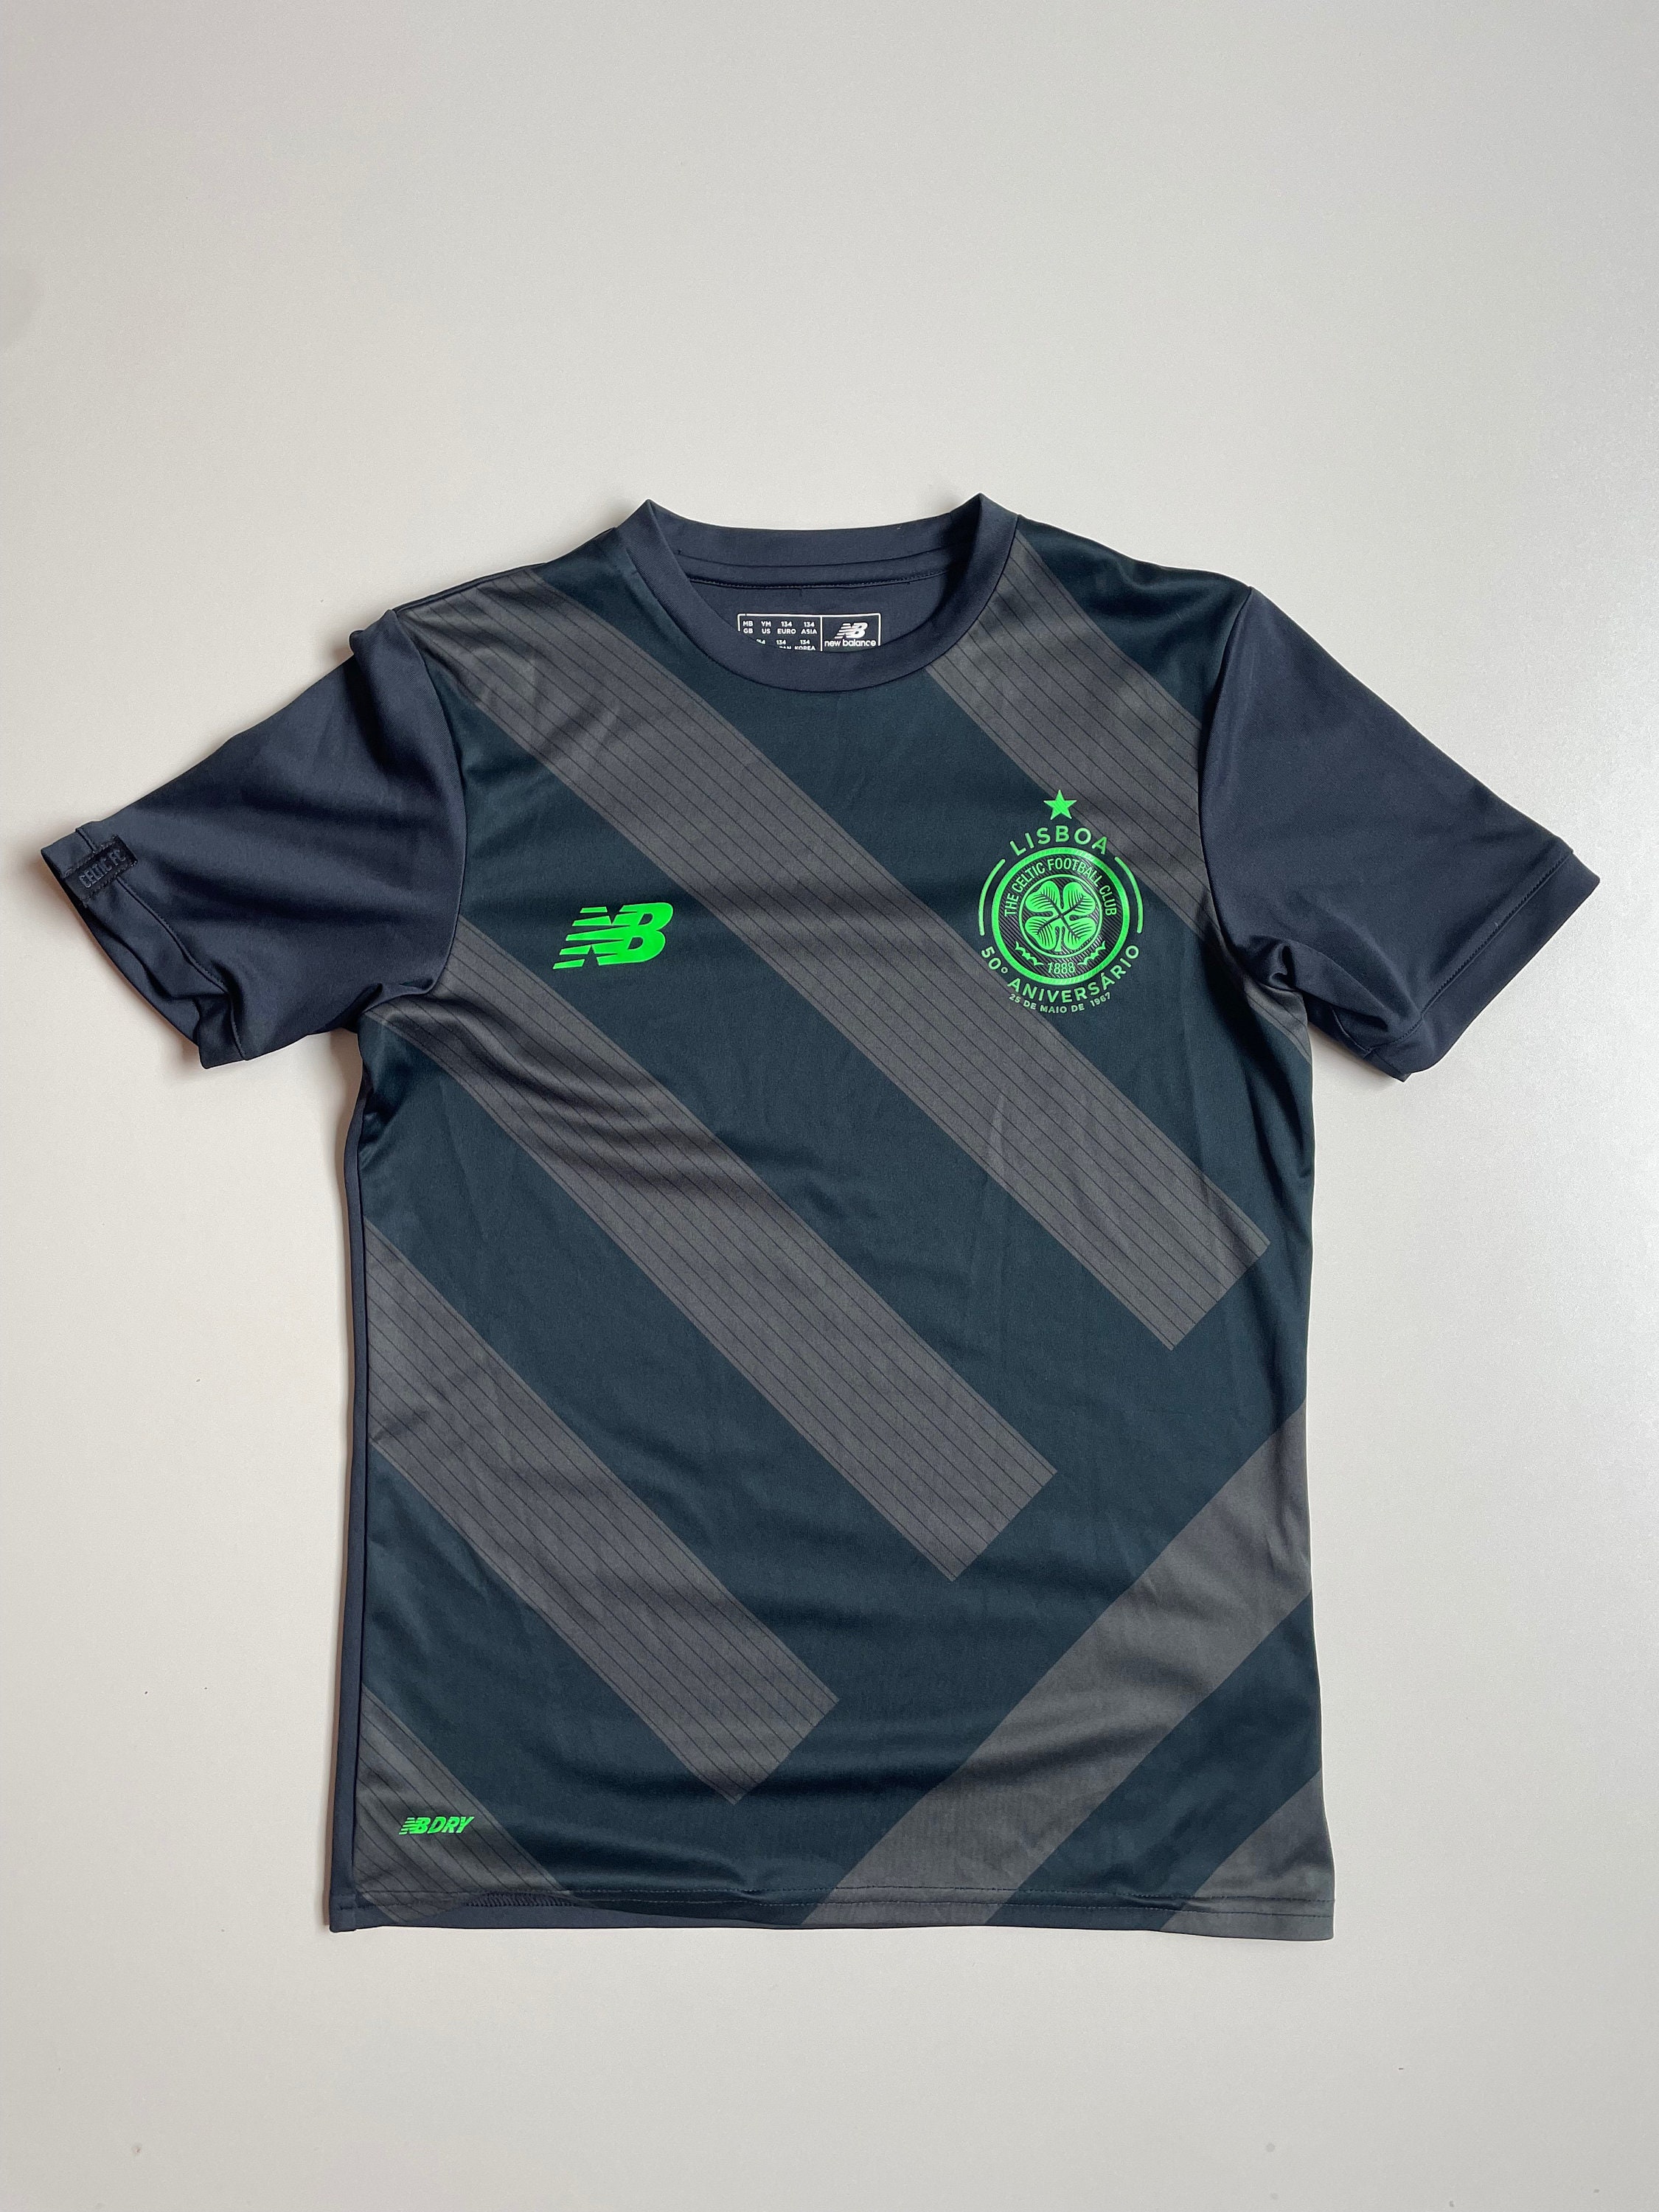  New Balance Women's Celtic FC Short Sleeve Jersey, Home, 6 :  Sports & Outdoors